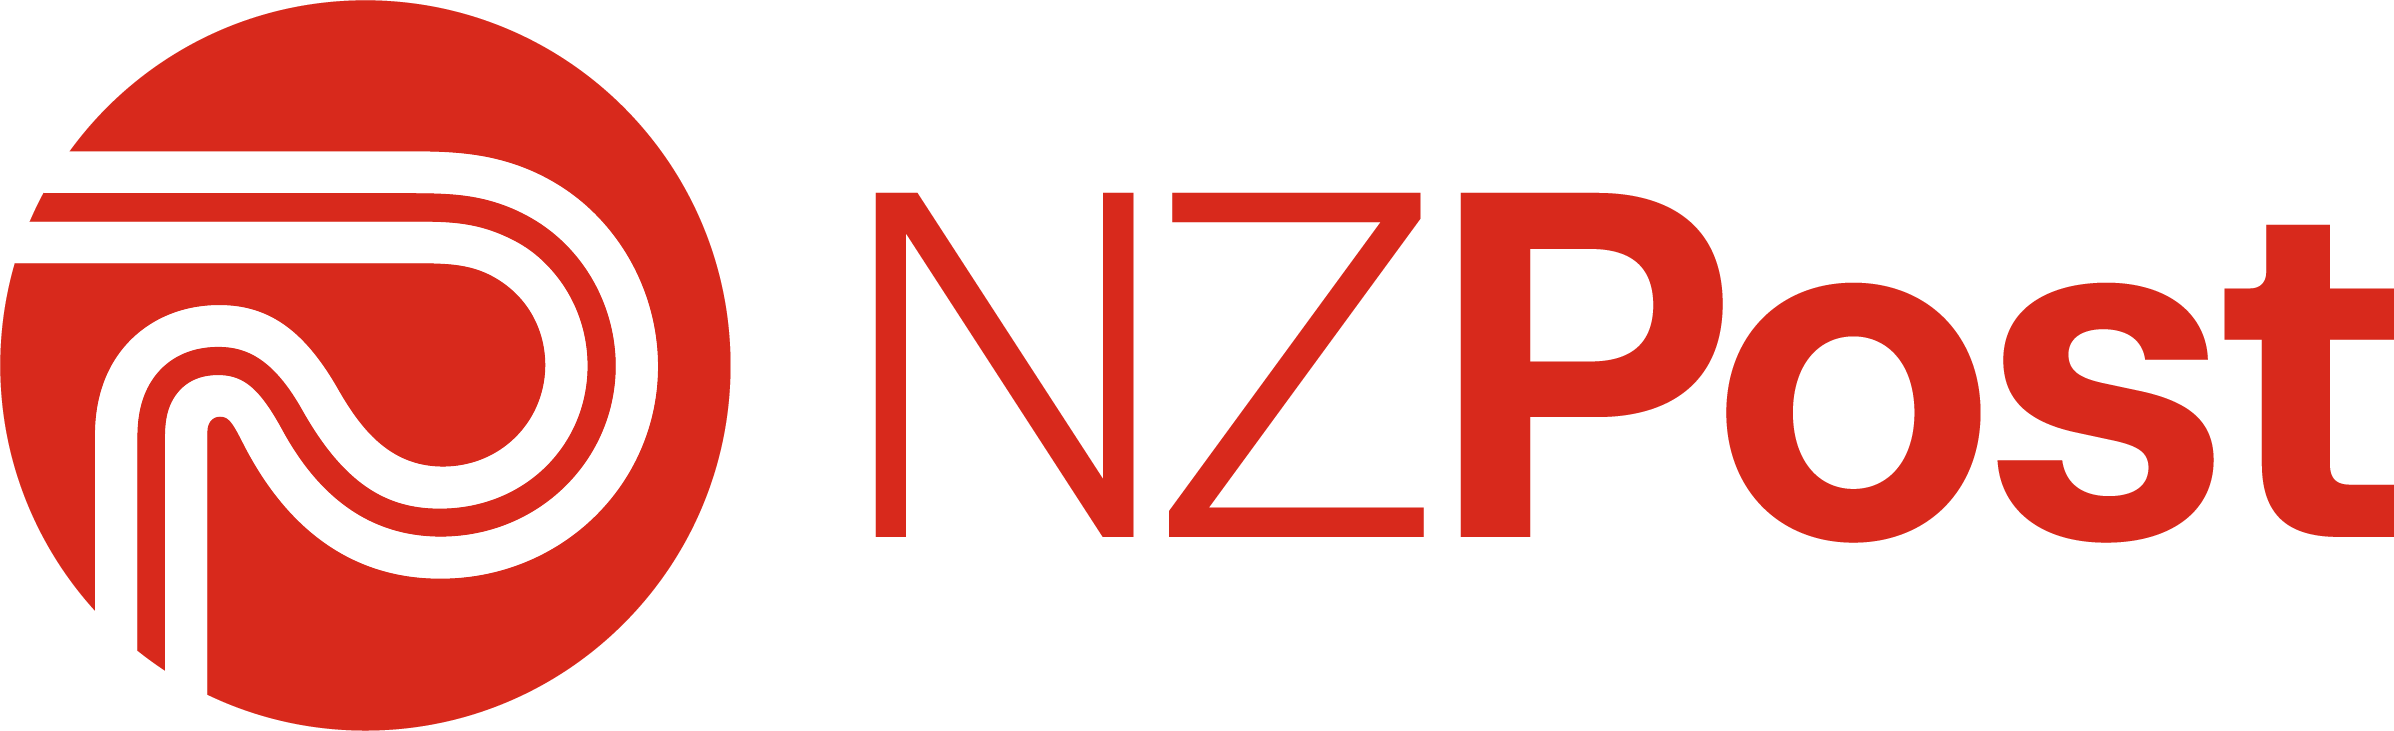 nzpost logo.png